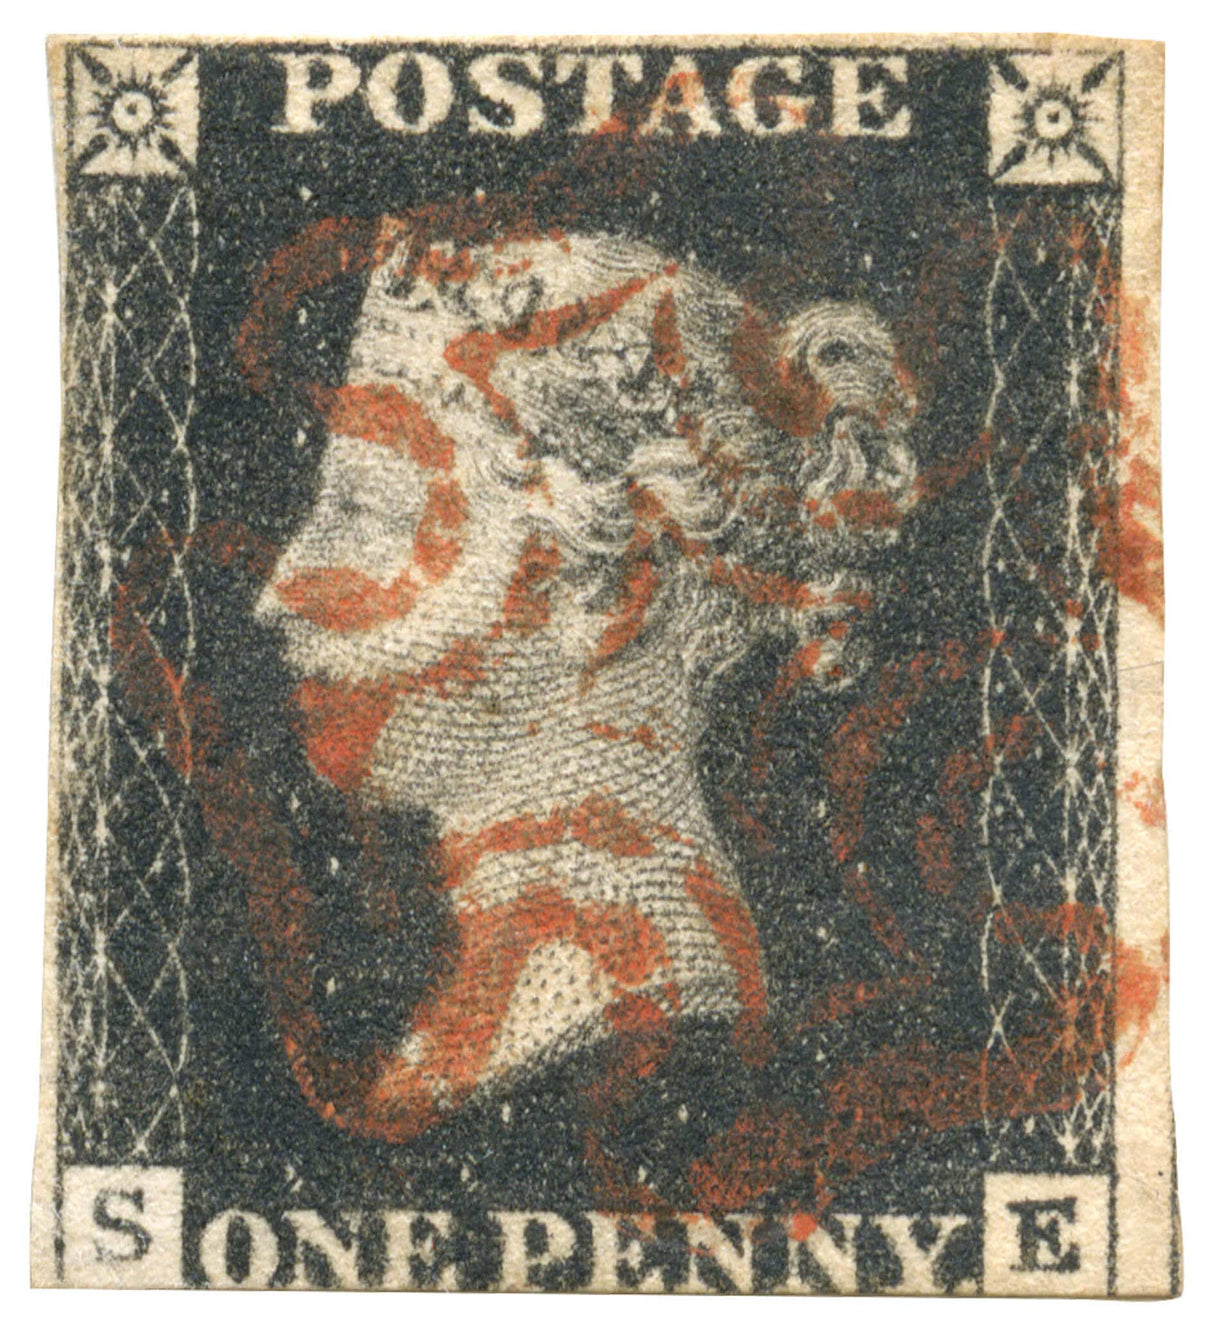 1840 Penny Black Fine Used